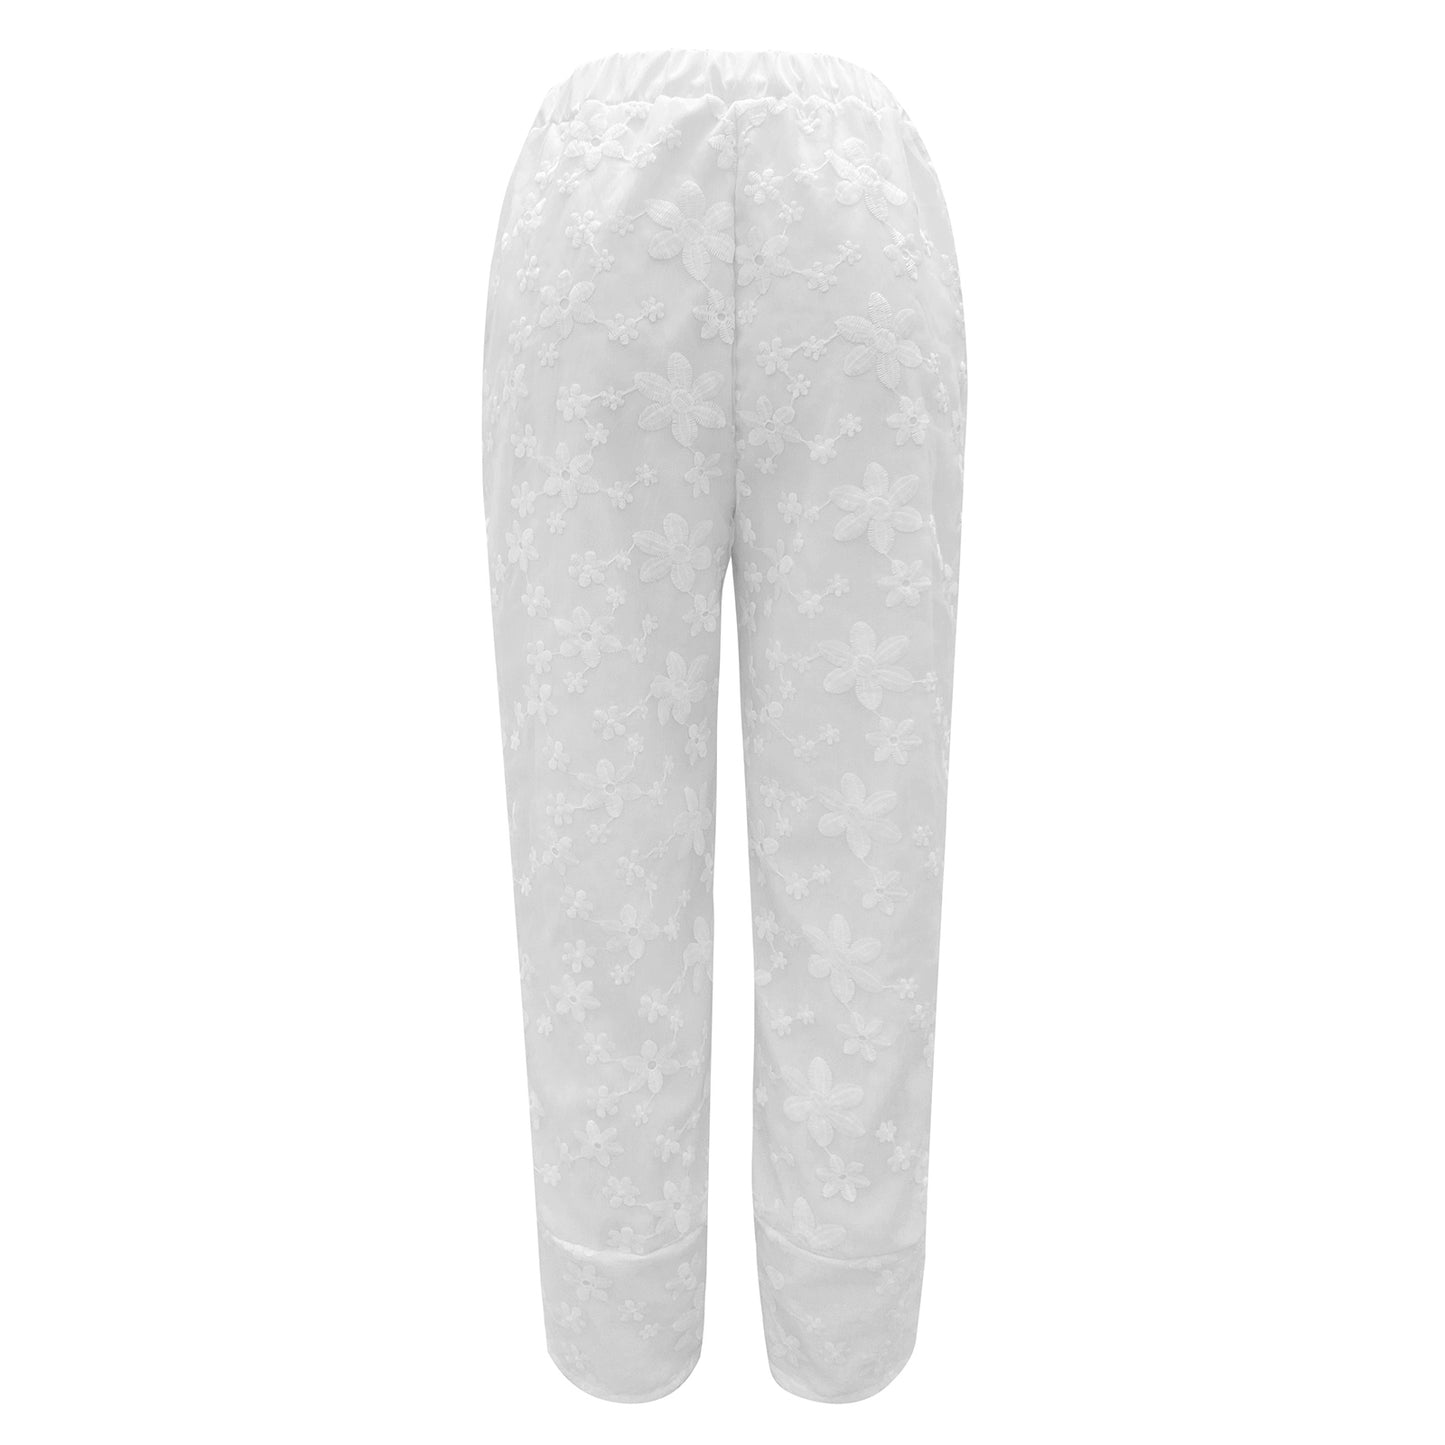 Spring Summer Split Cotton Linen Lace up Casual Pants for Women